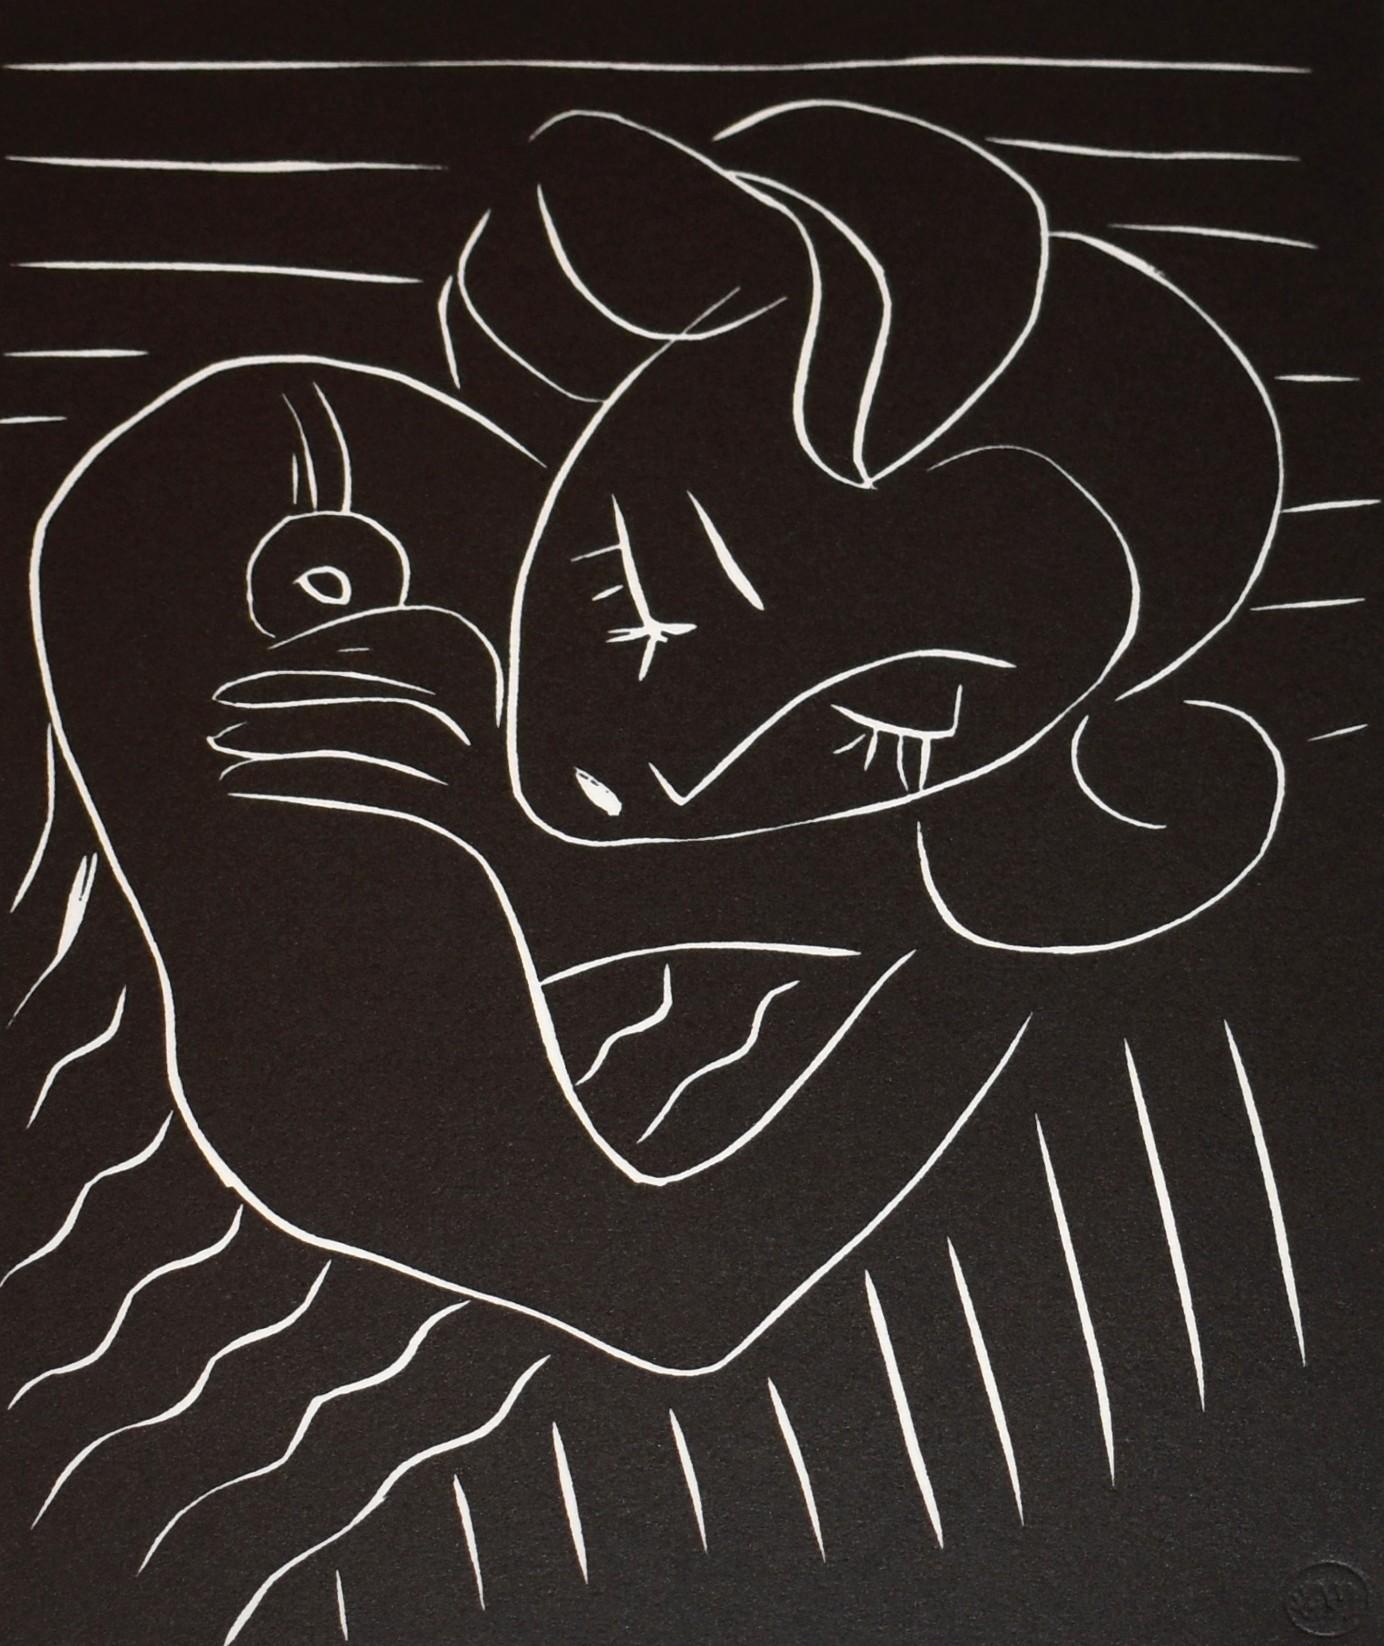 Pasiphae Plate 23 - Print by Henri Matisse